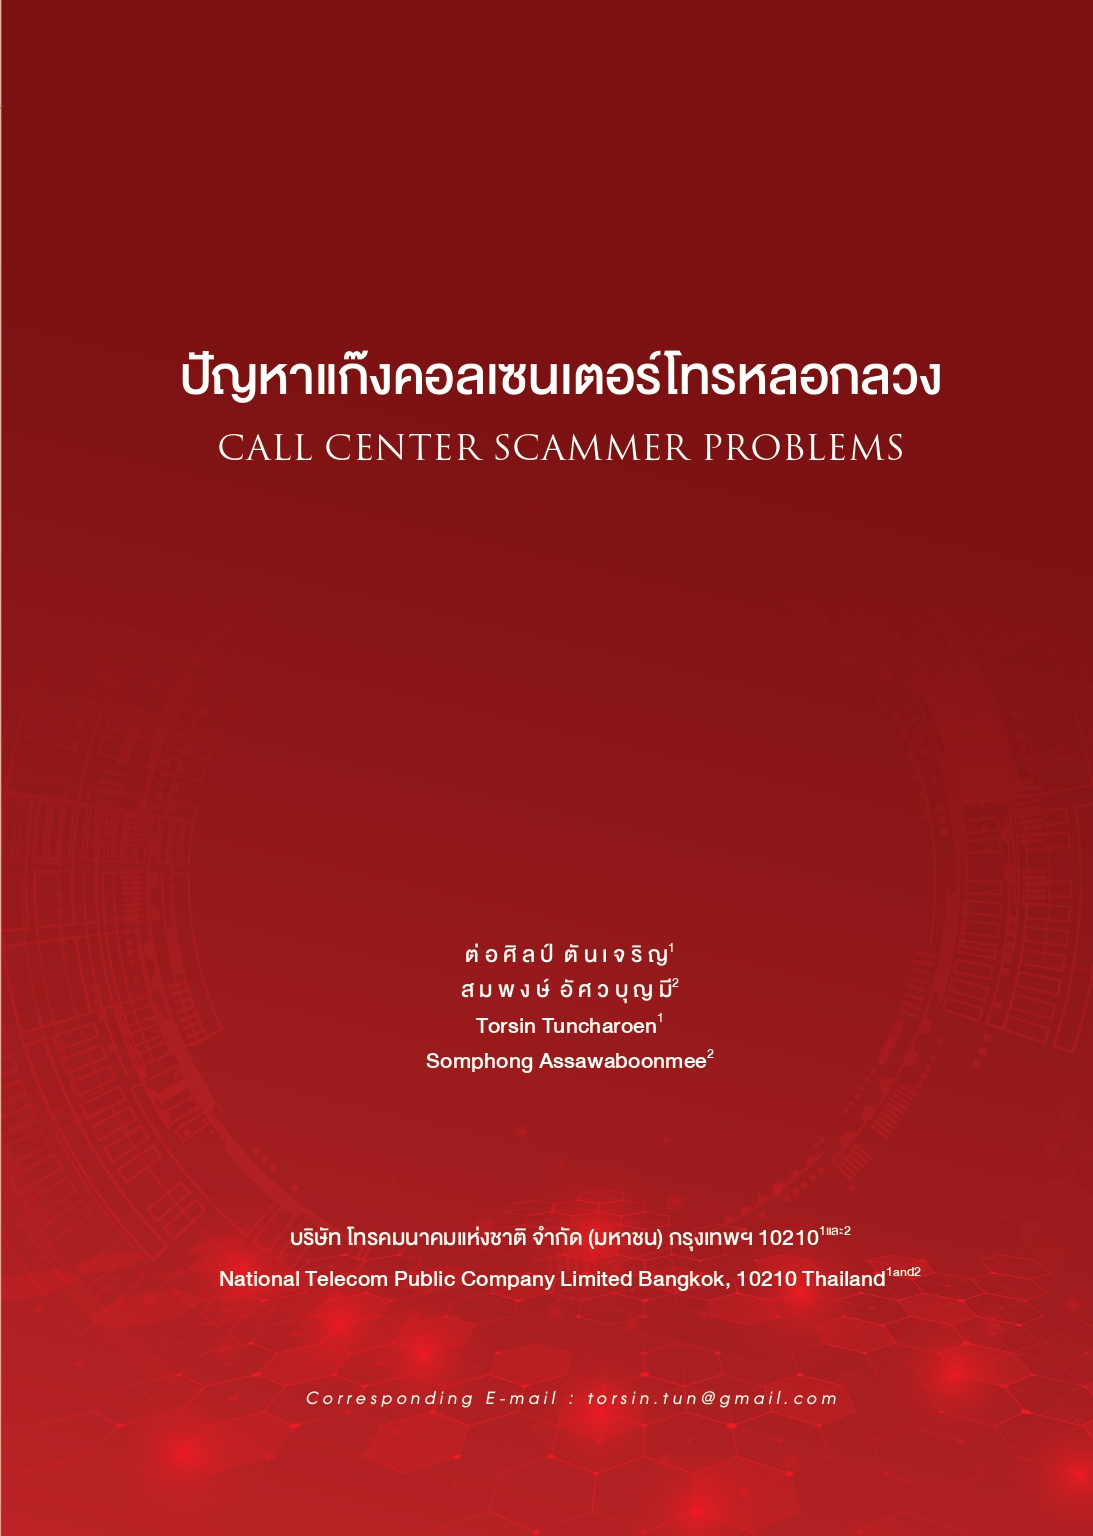 CALL CENTER SCAMMER PROBLEMS